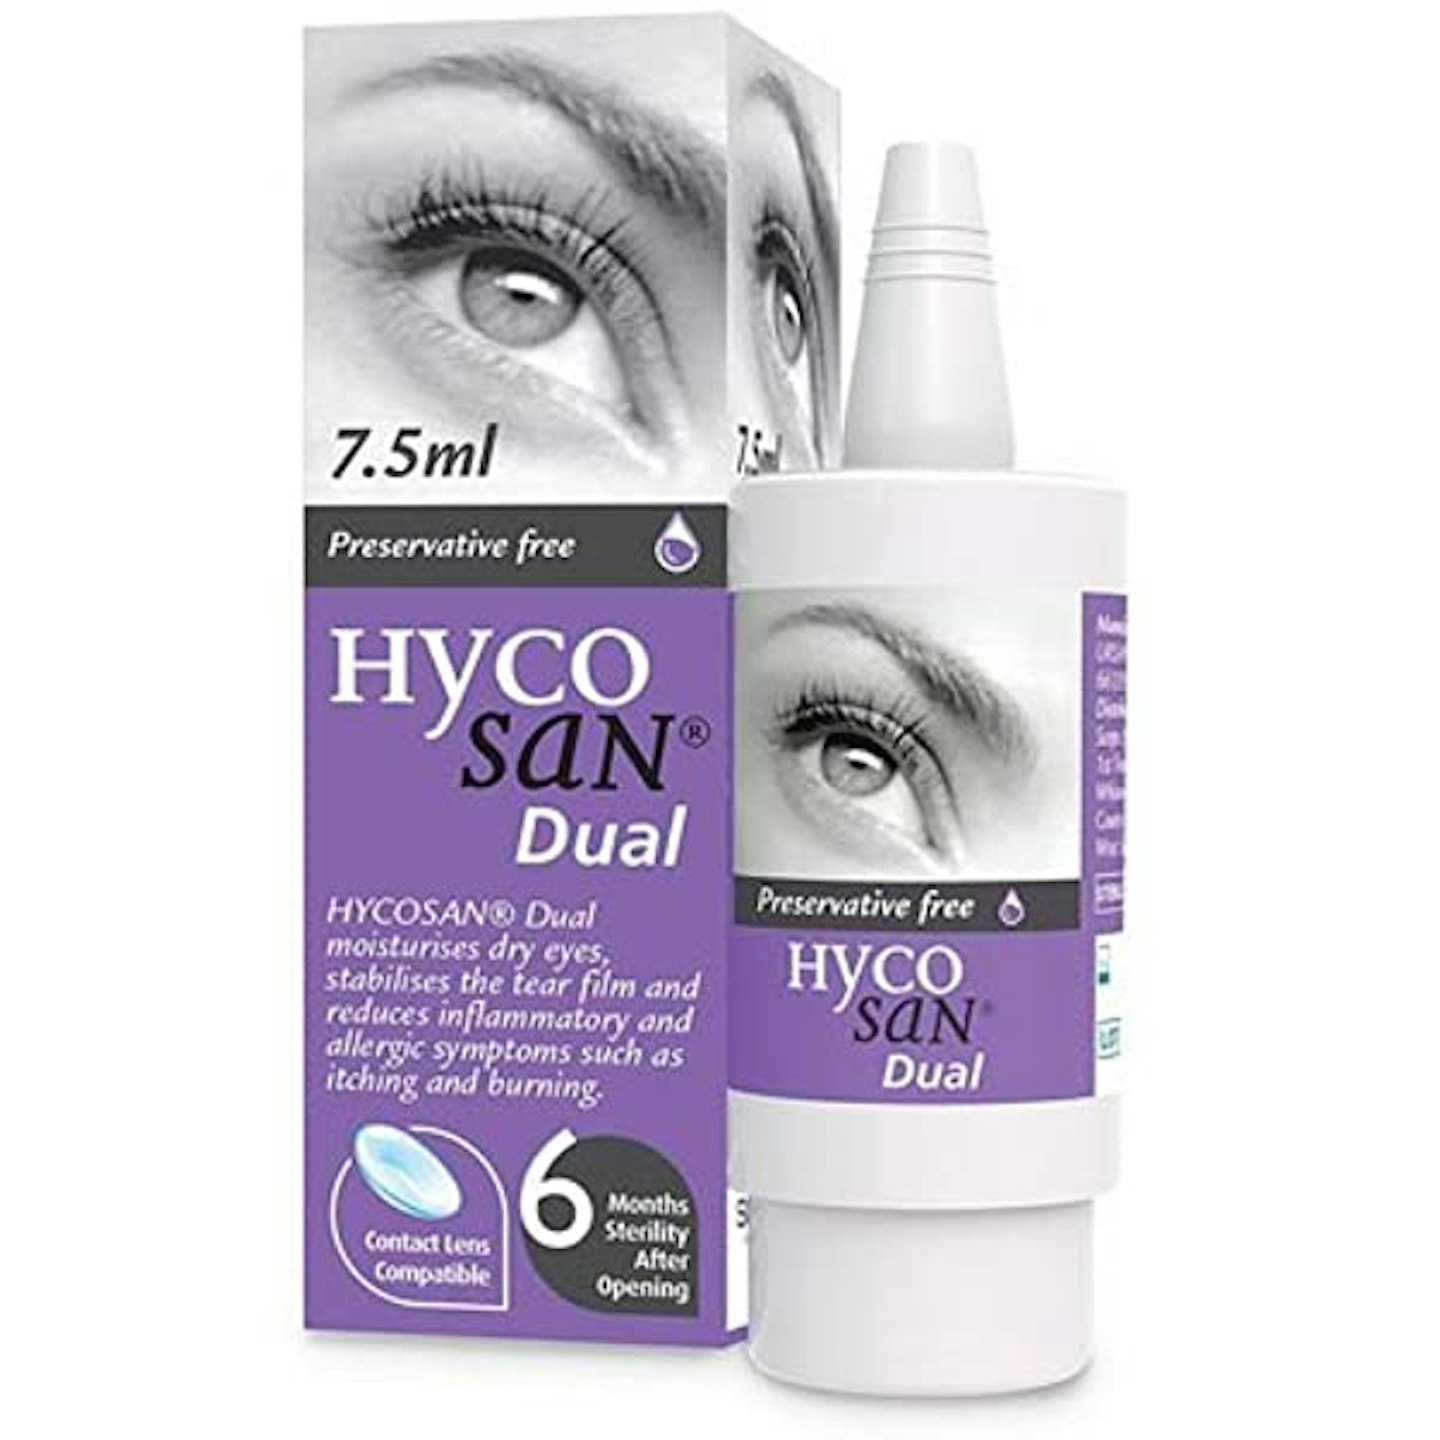 Hycosan Dual Eyedrops, £14.99